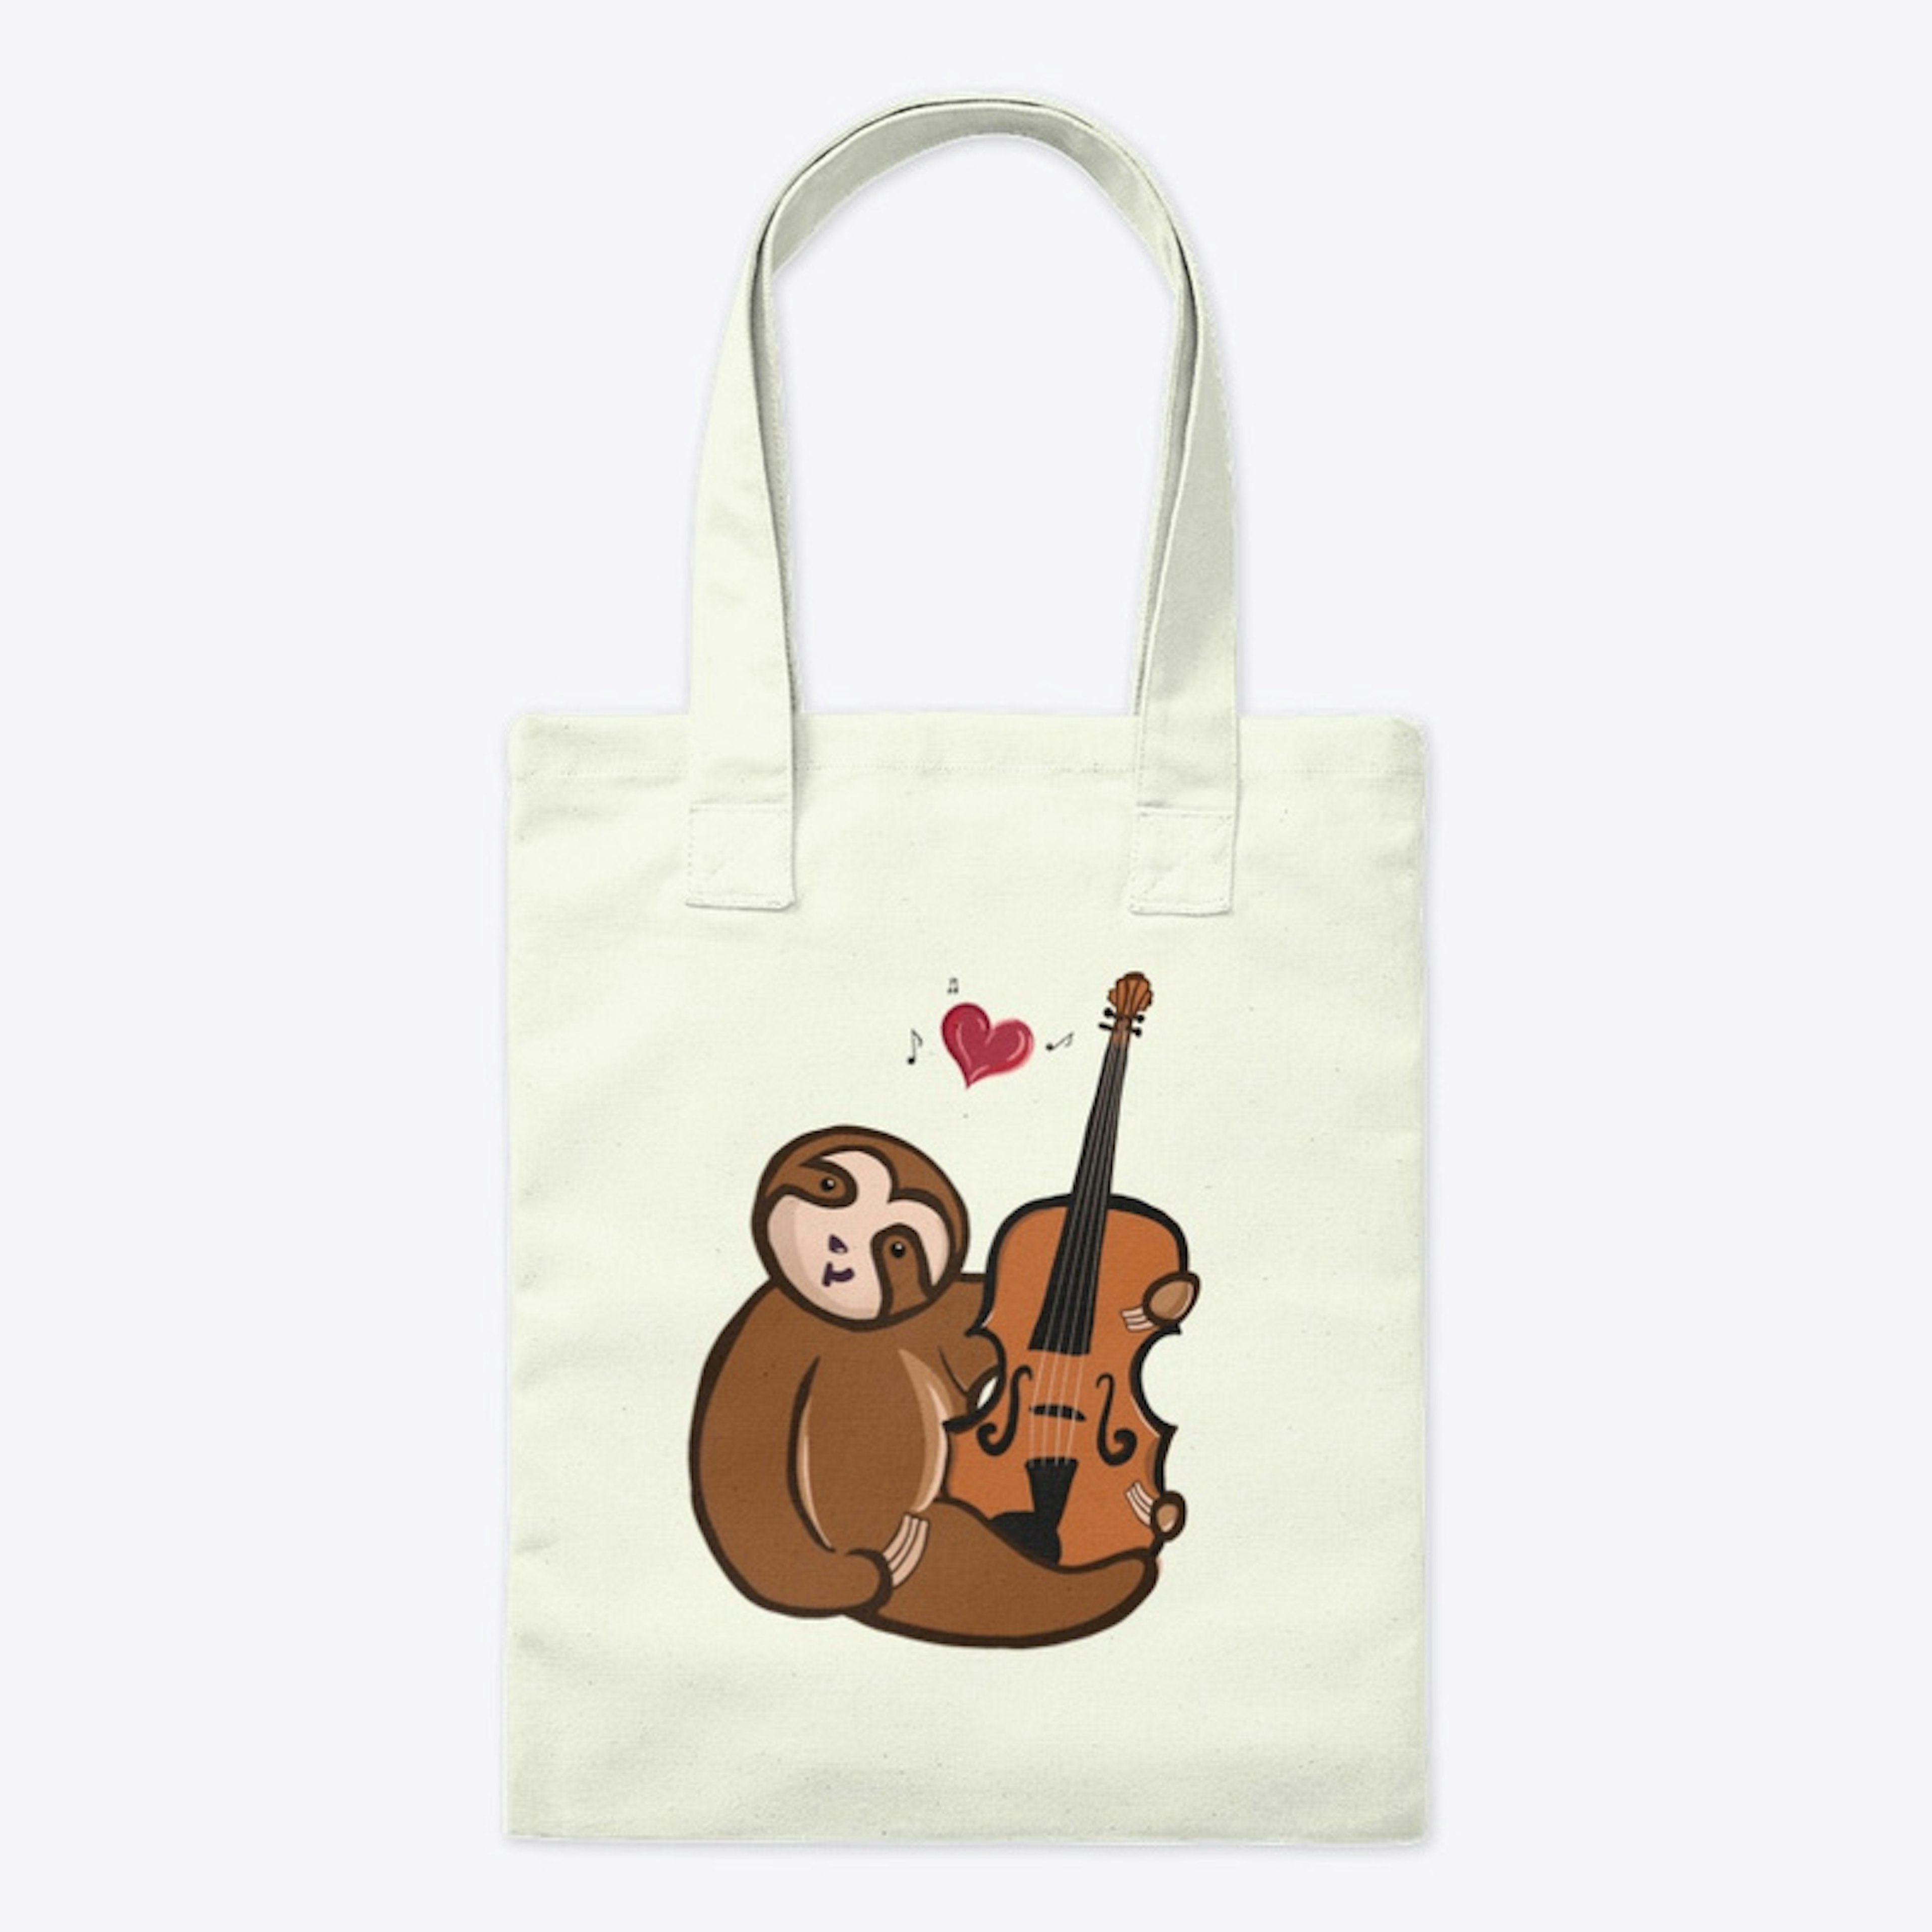 Baby Sloth Loves His Violin!